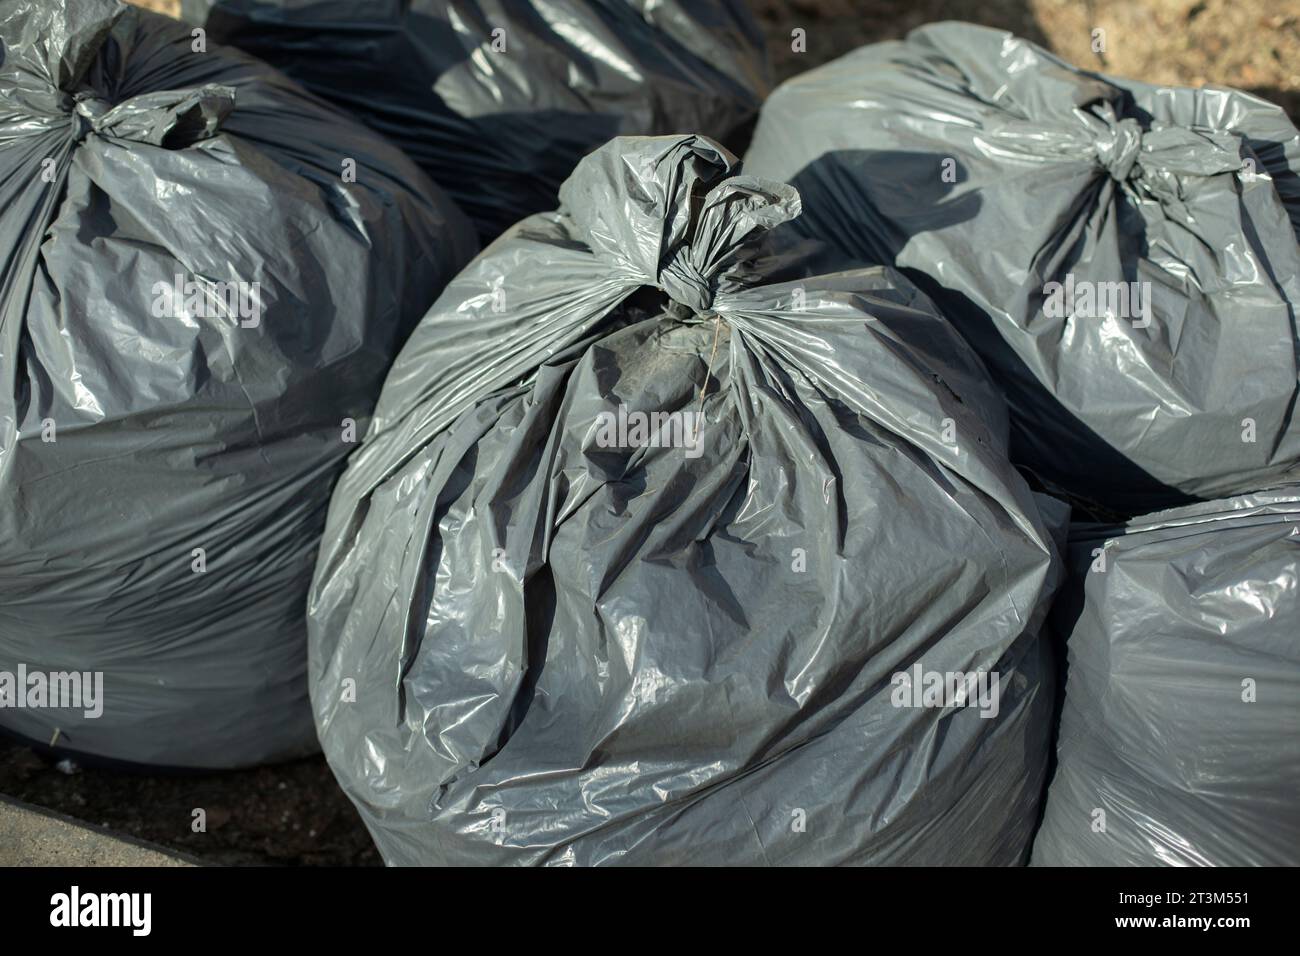 Large Group Full Garbage Bags Pile Stock Photo 621596198